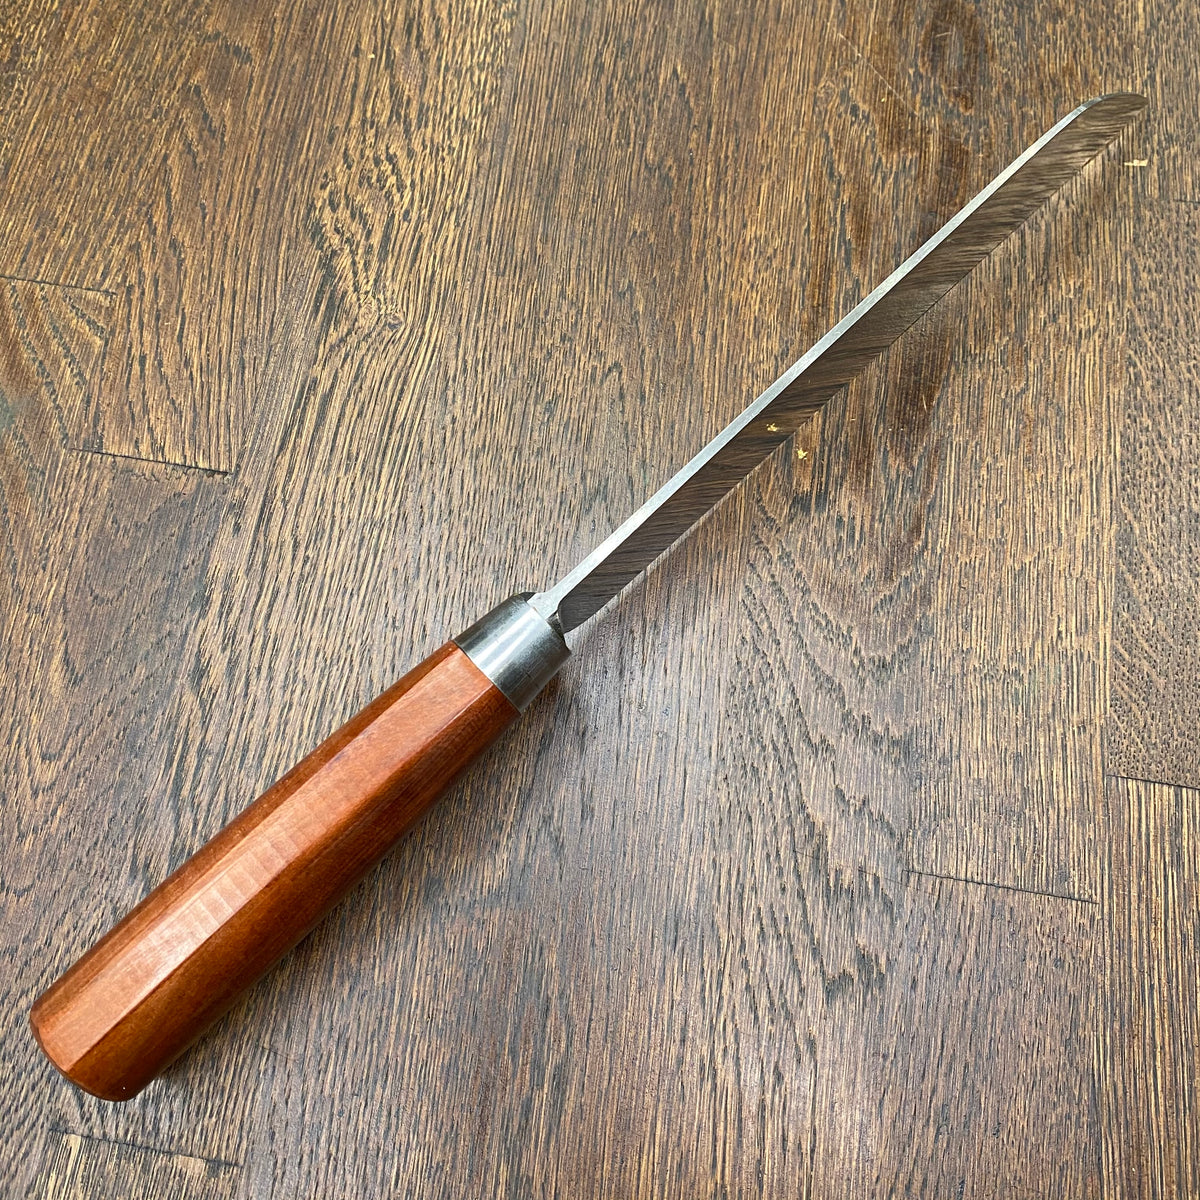 Friedr Herder 8” Old Netherlands Knife Boscher Carbon Steel Cherry